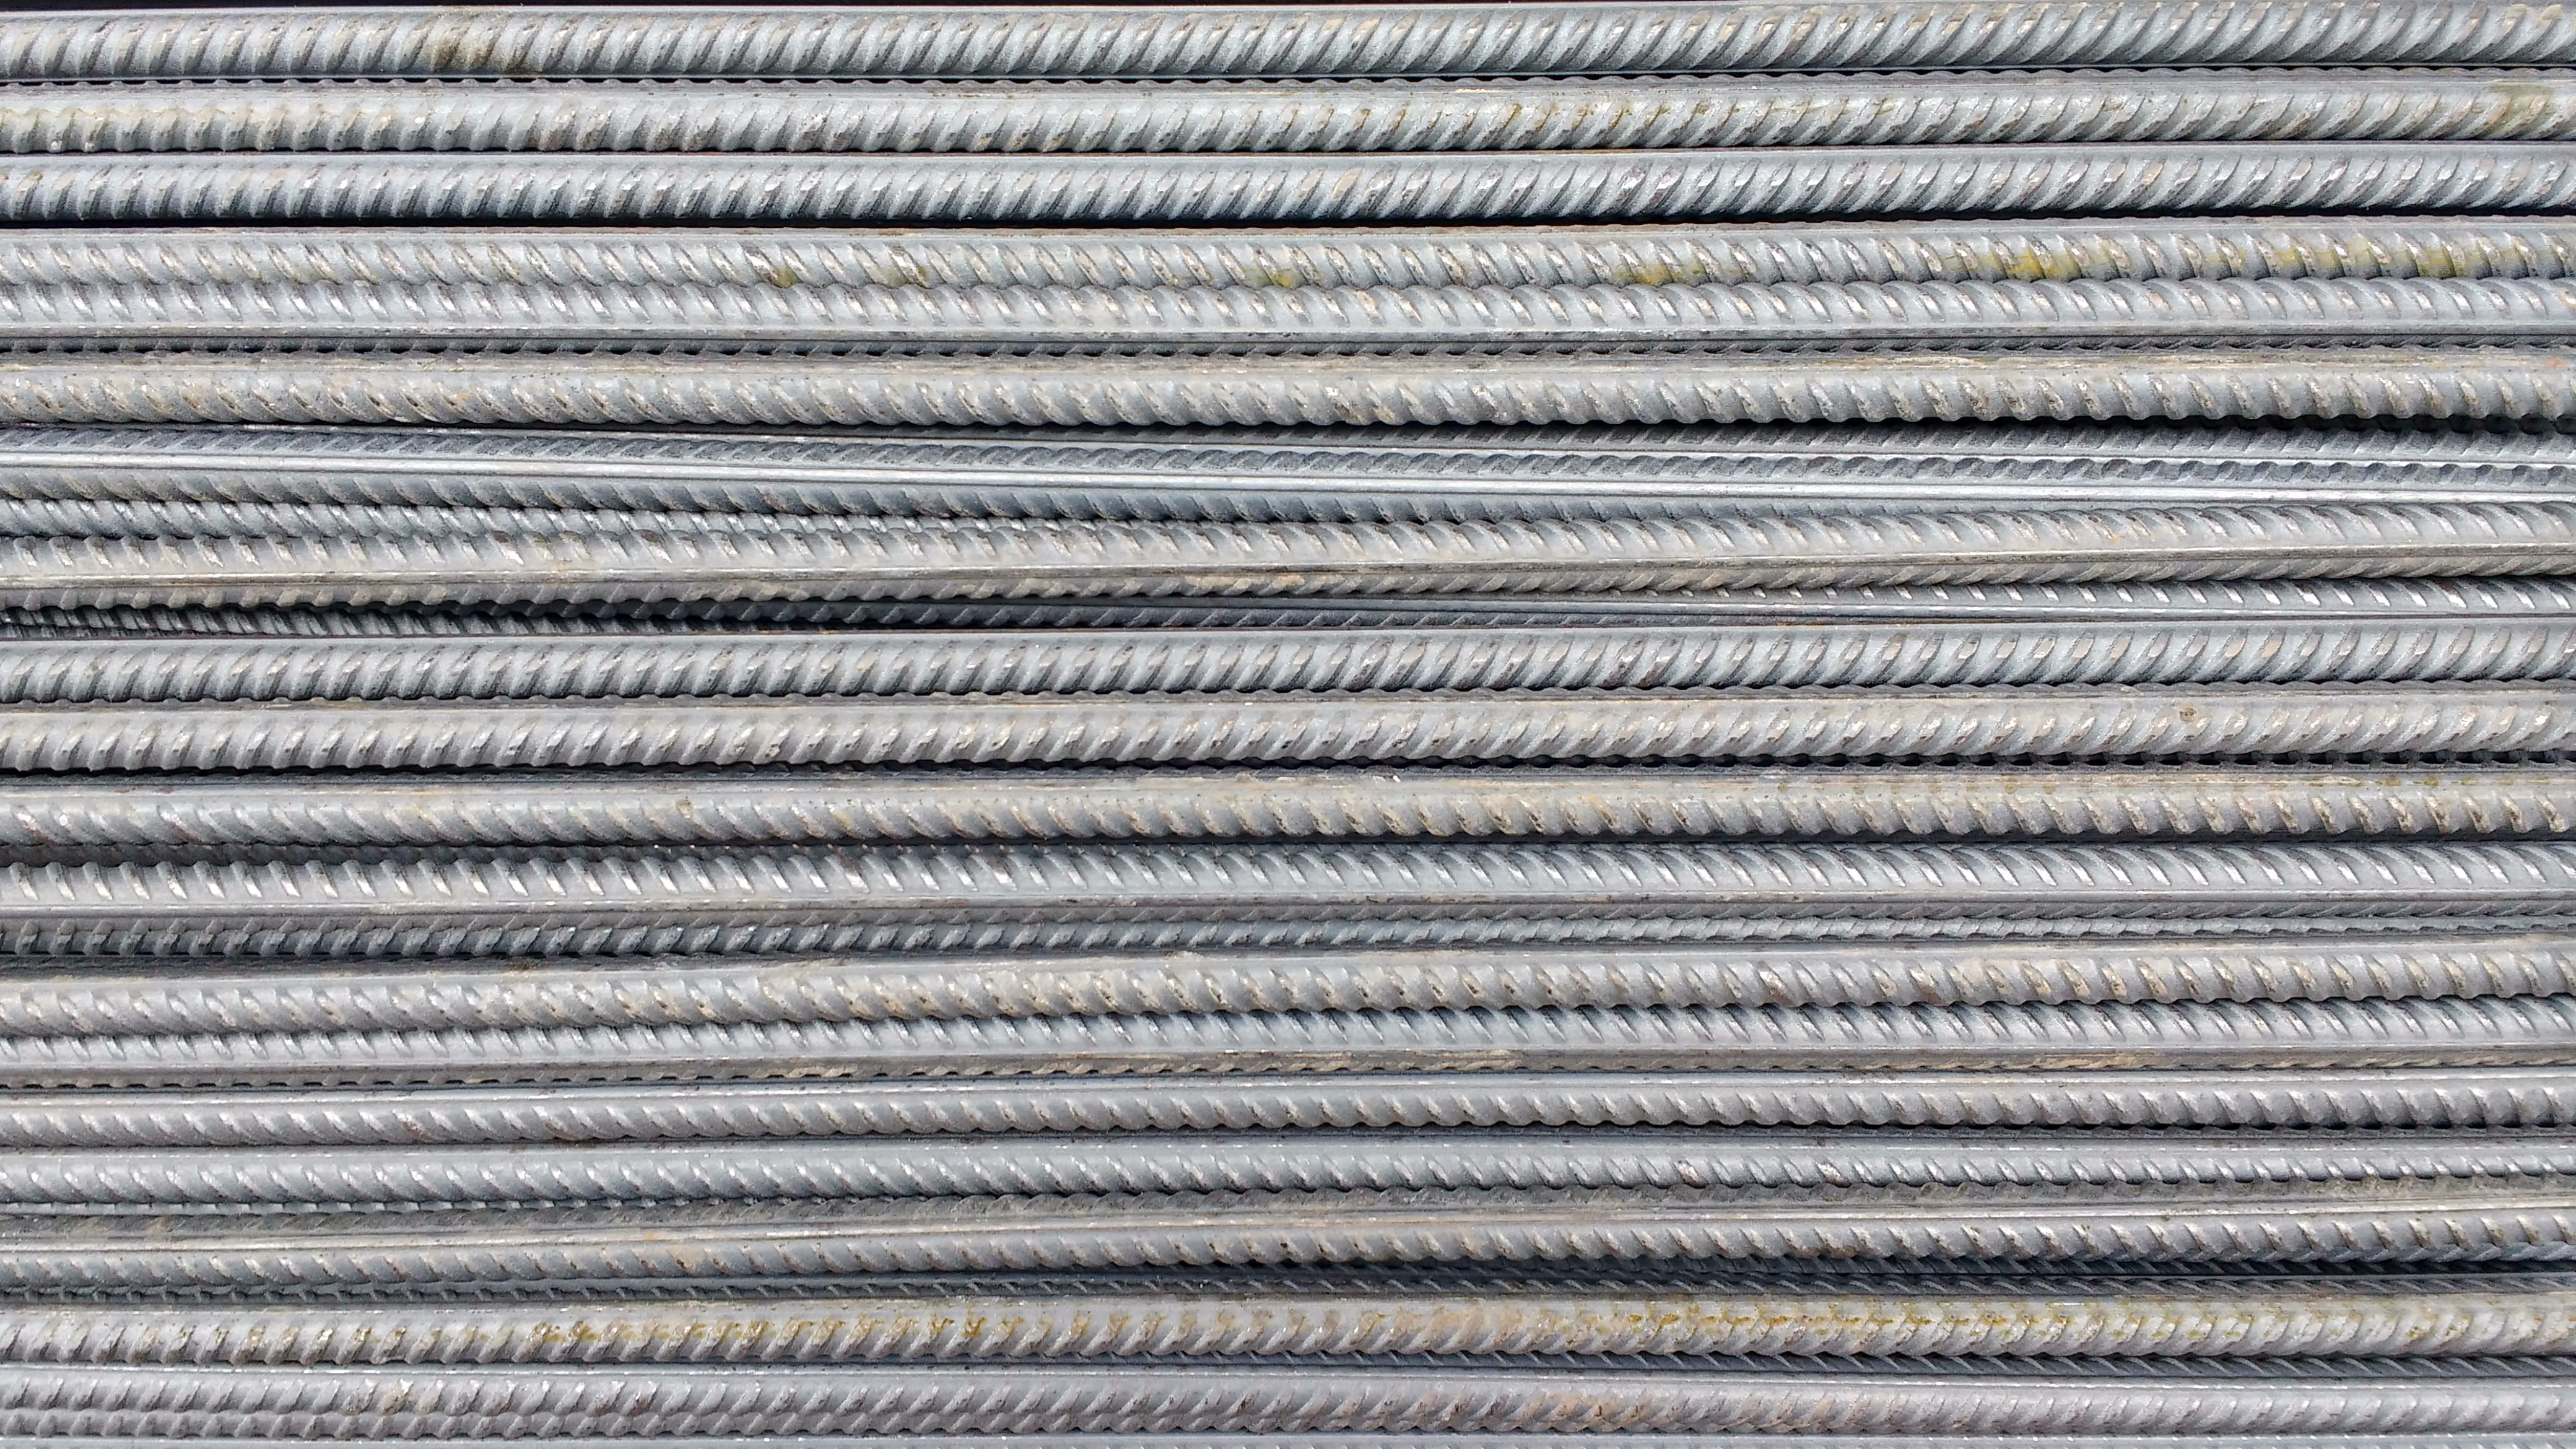 Steel, Reinforcement, Iron, Metal, site, pattern, background